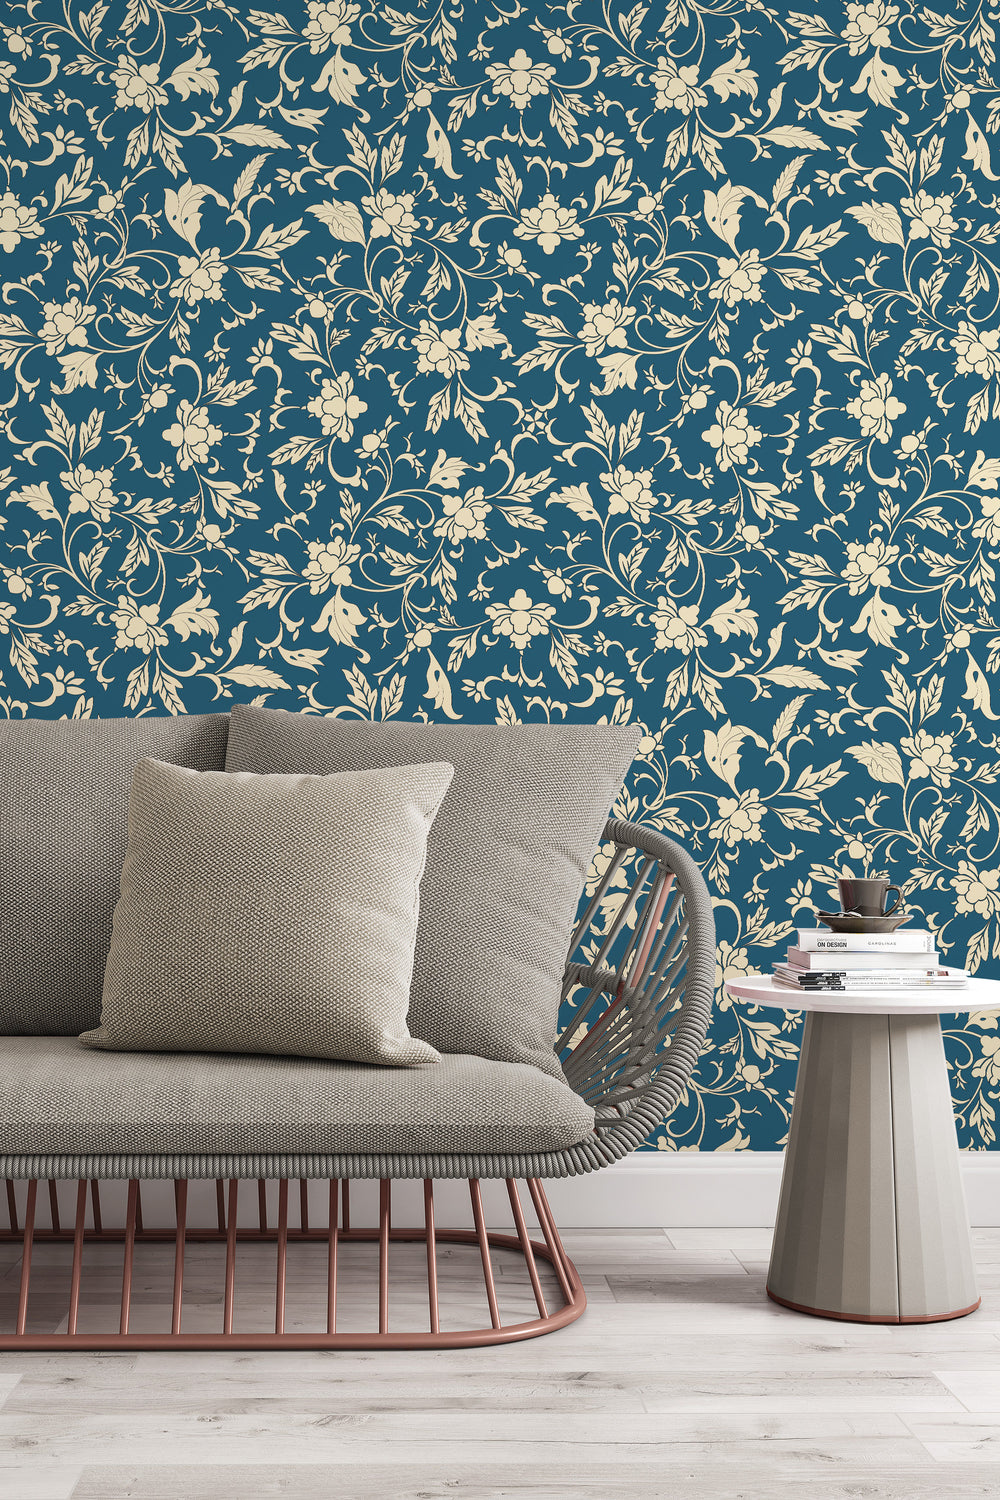 William Morris light dark wallpaper floral NEW -  Peel and Stick - Traditional Wallpaper #3559